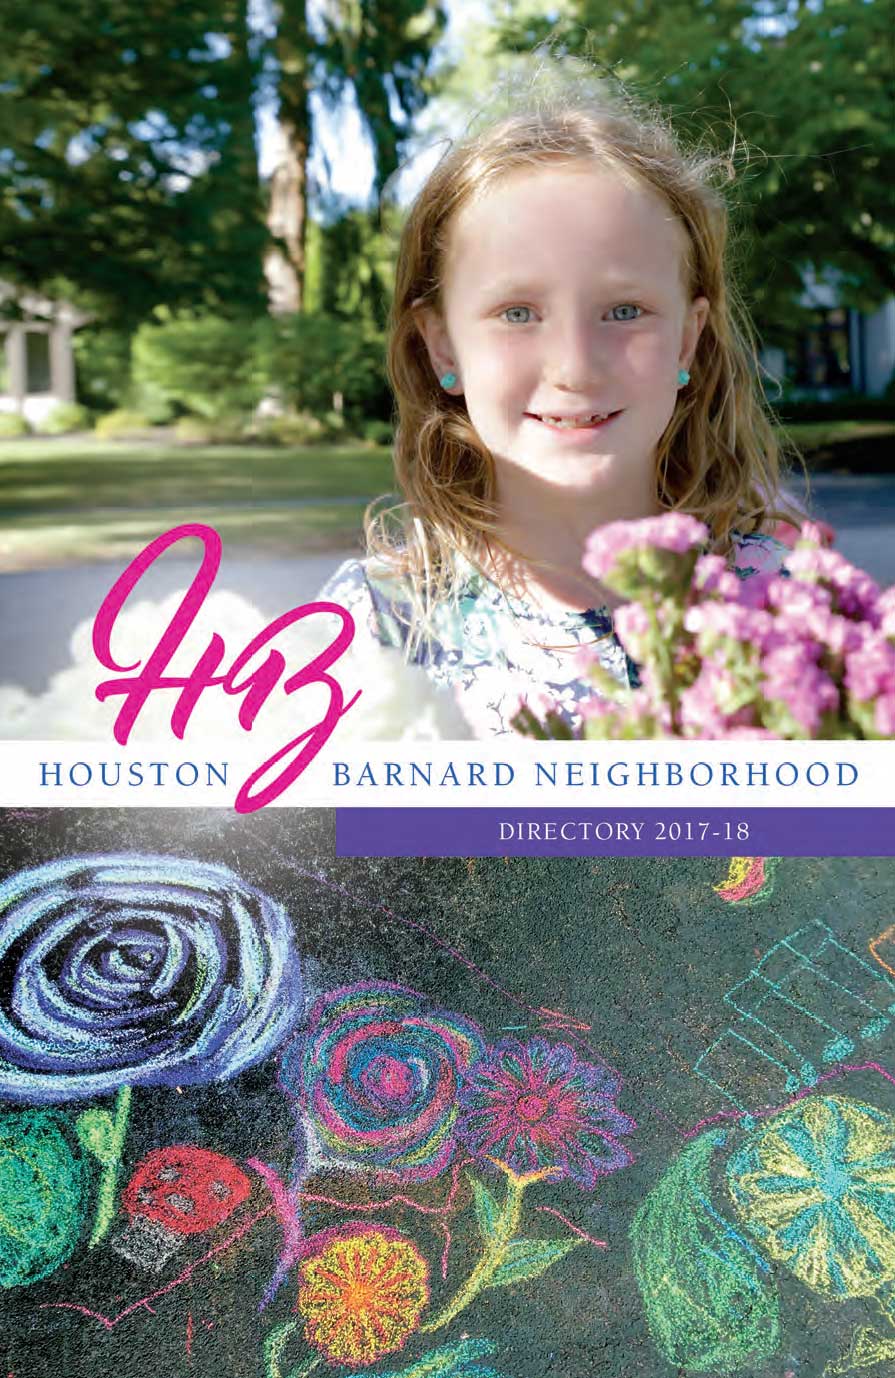 Houston Barnard neighborhood directory, 2017-18, cover image